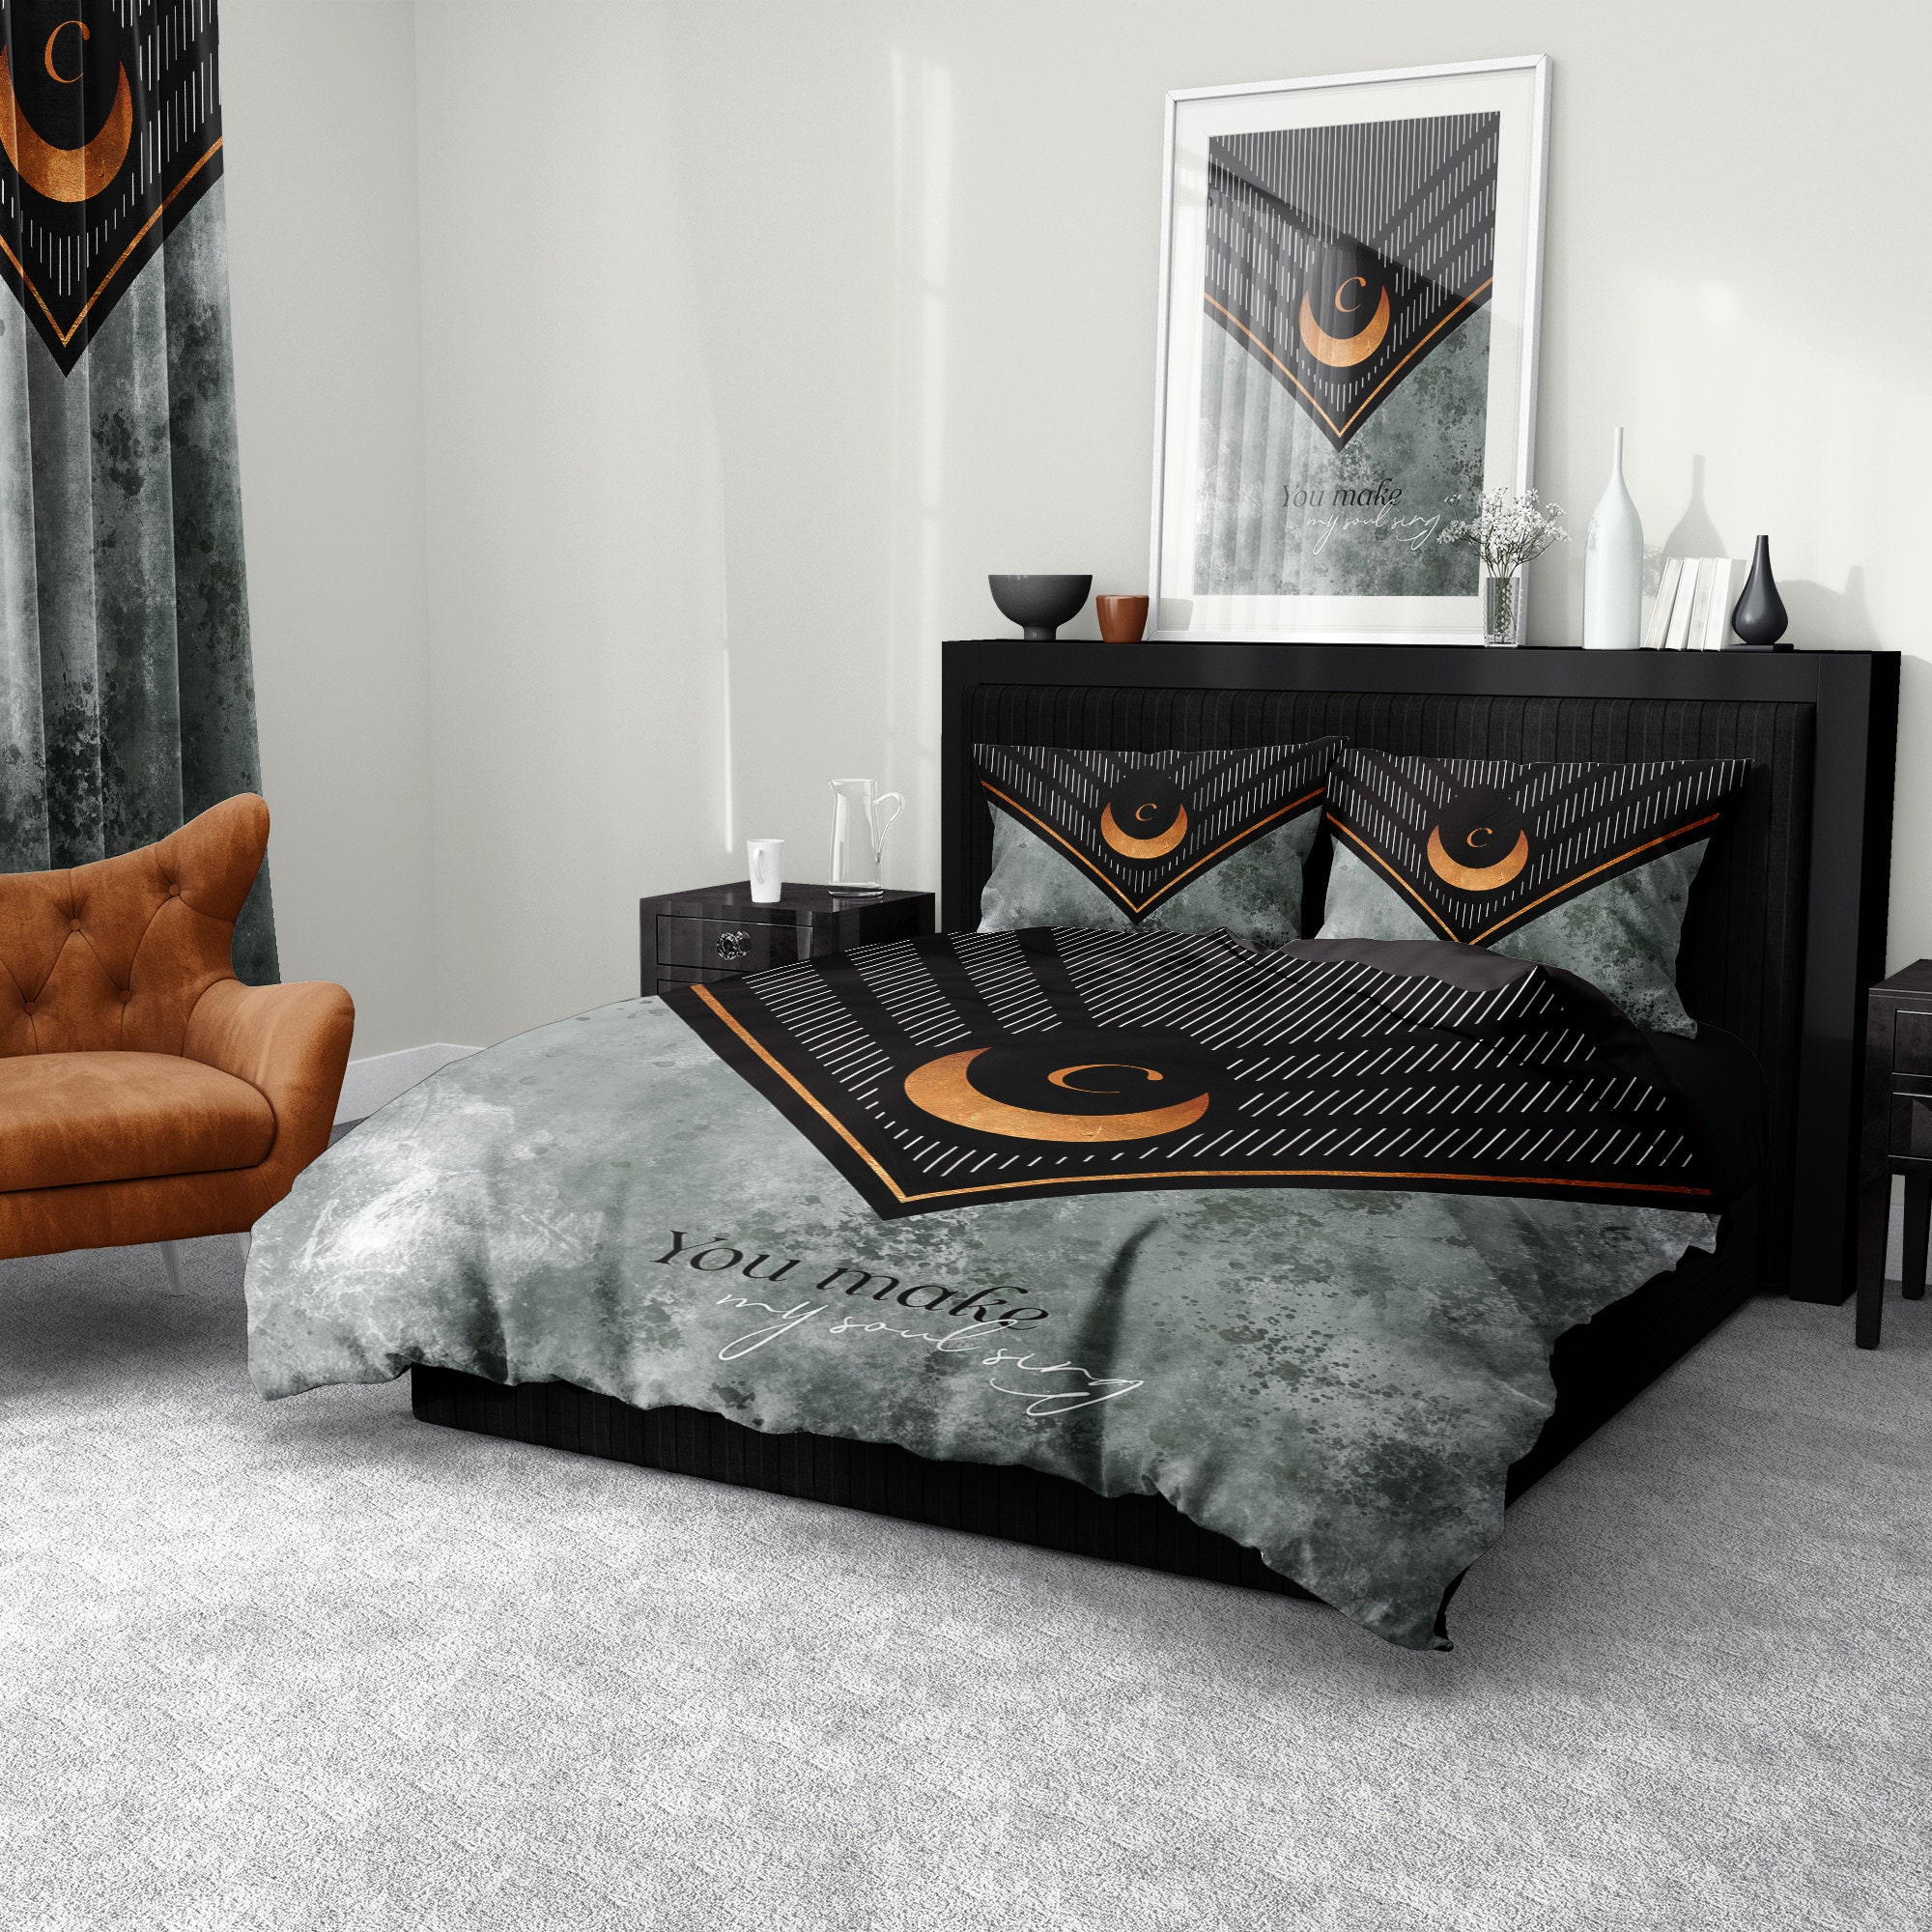 GG0 Gucci Bed Set \ Duvet Cover Set